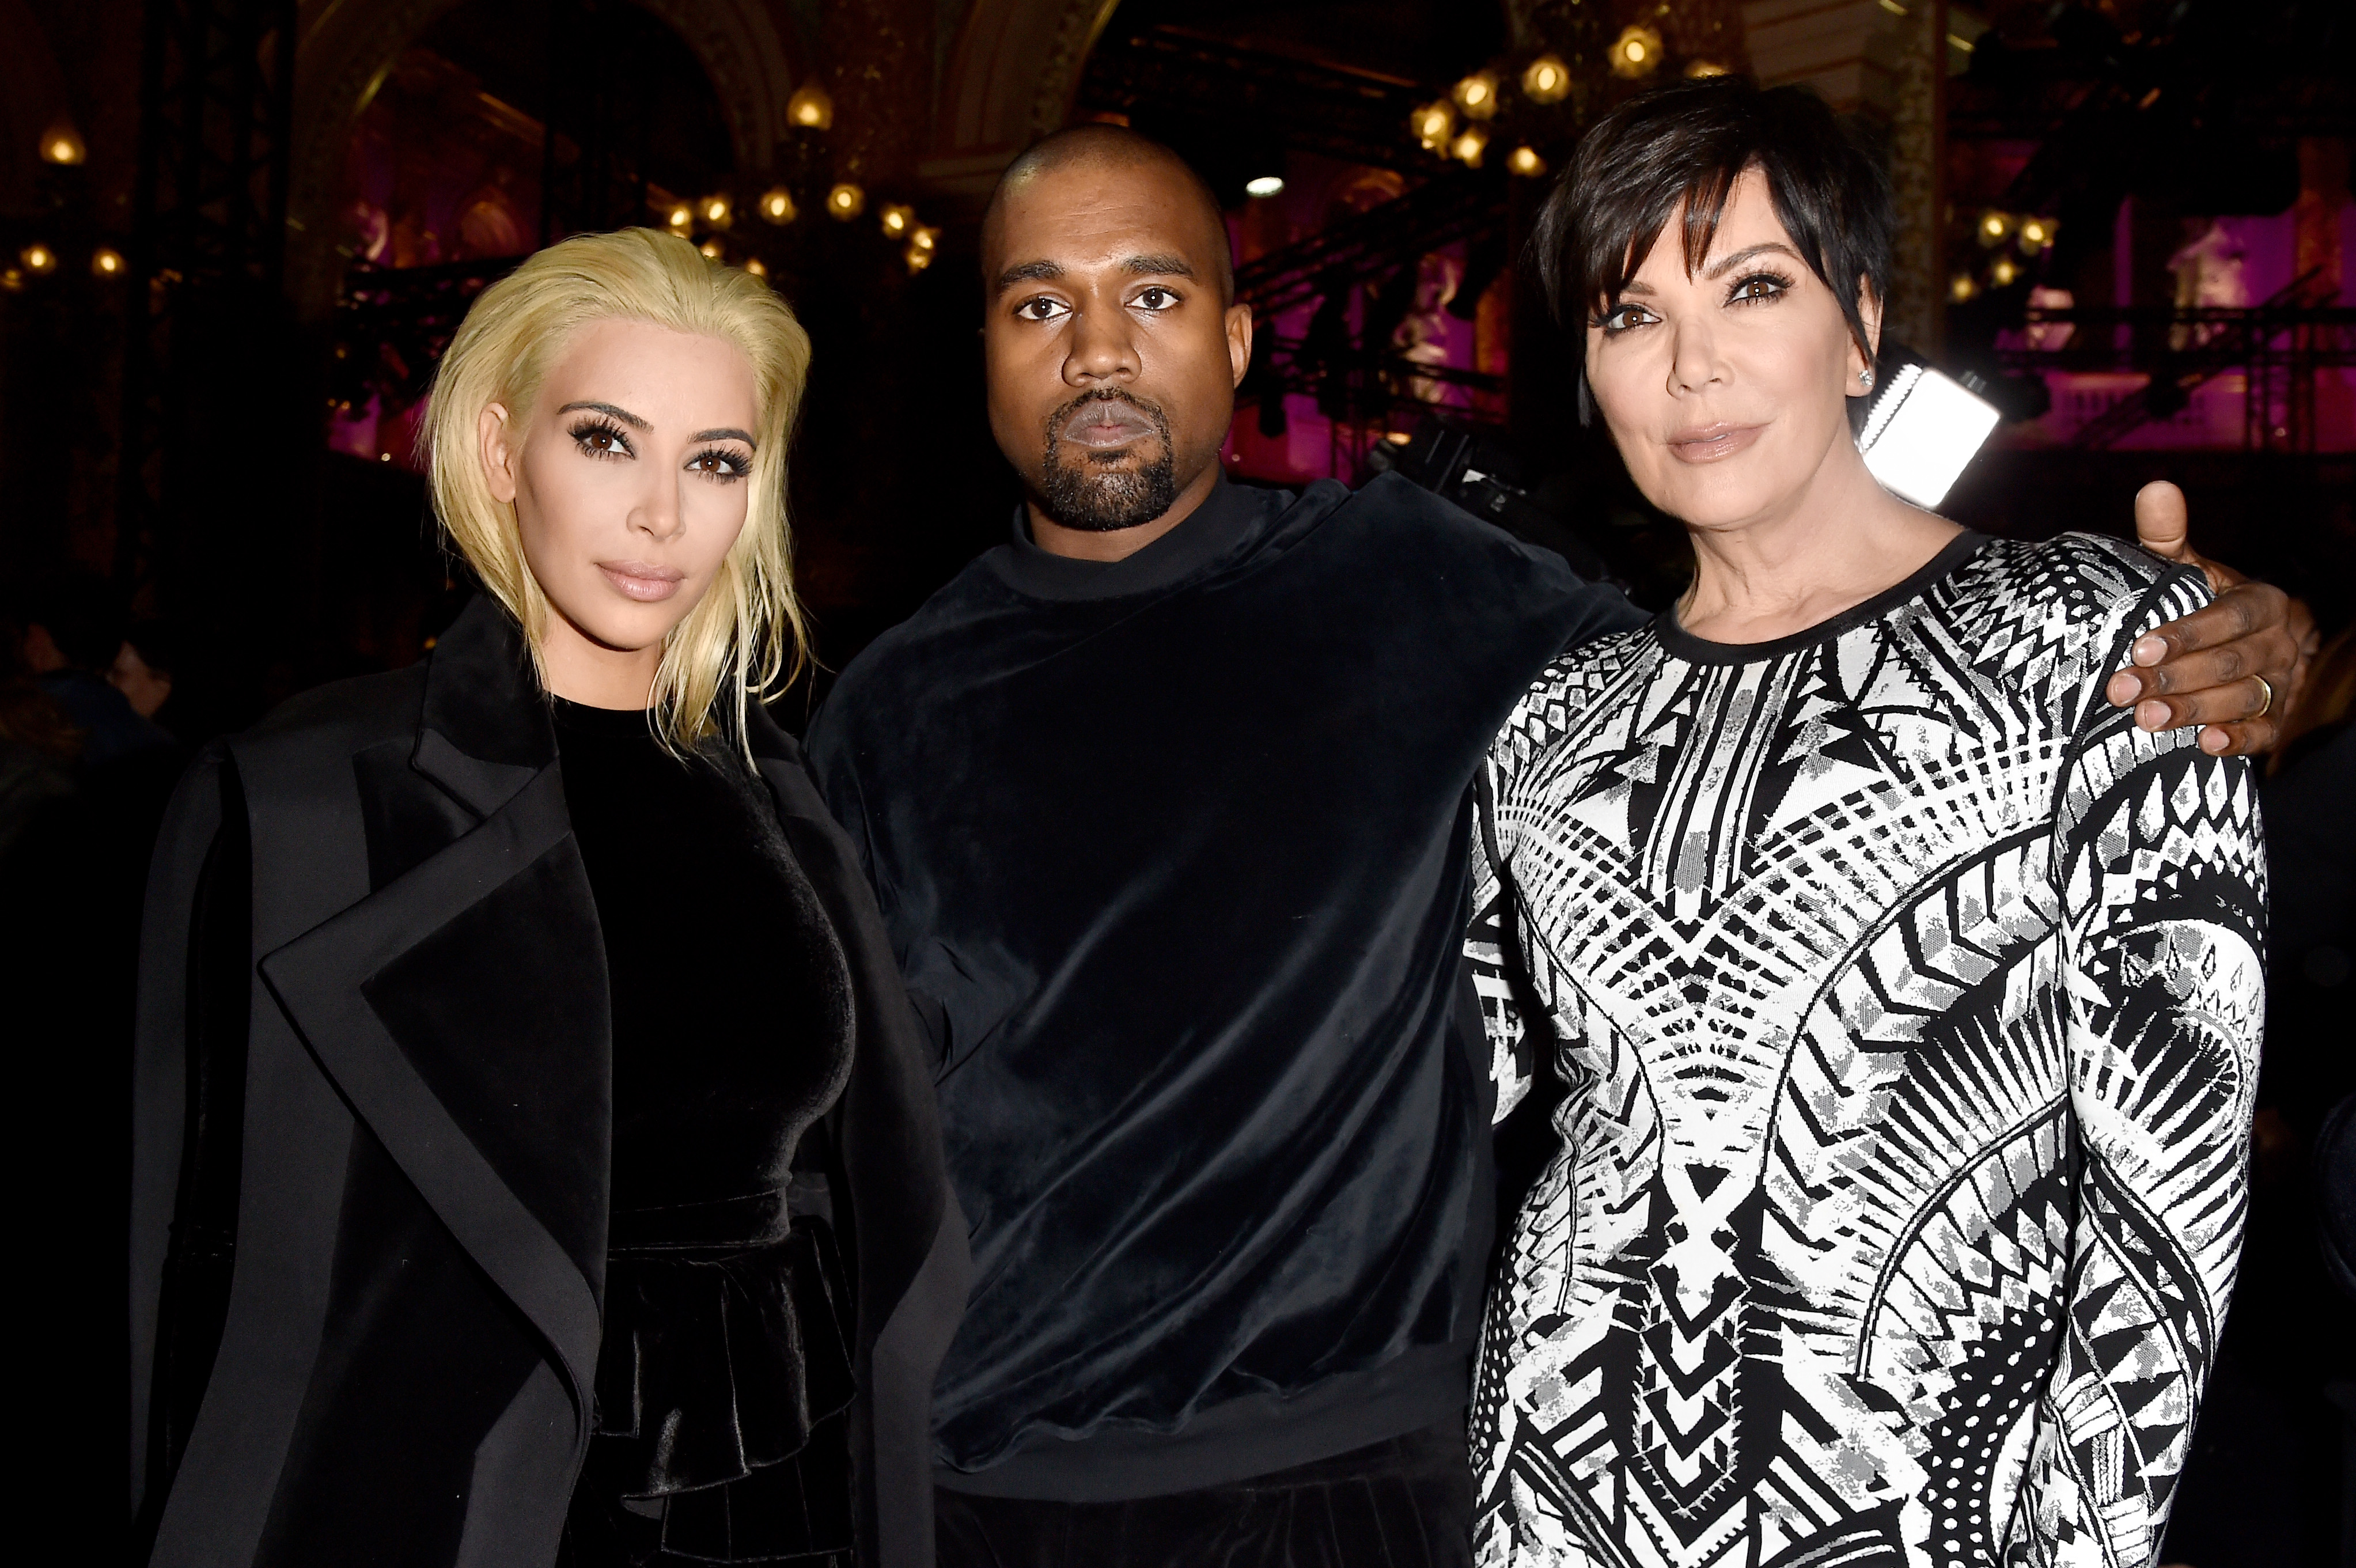 Kim Kardashian West, Kanye West, and Kris Jenner